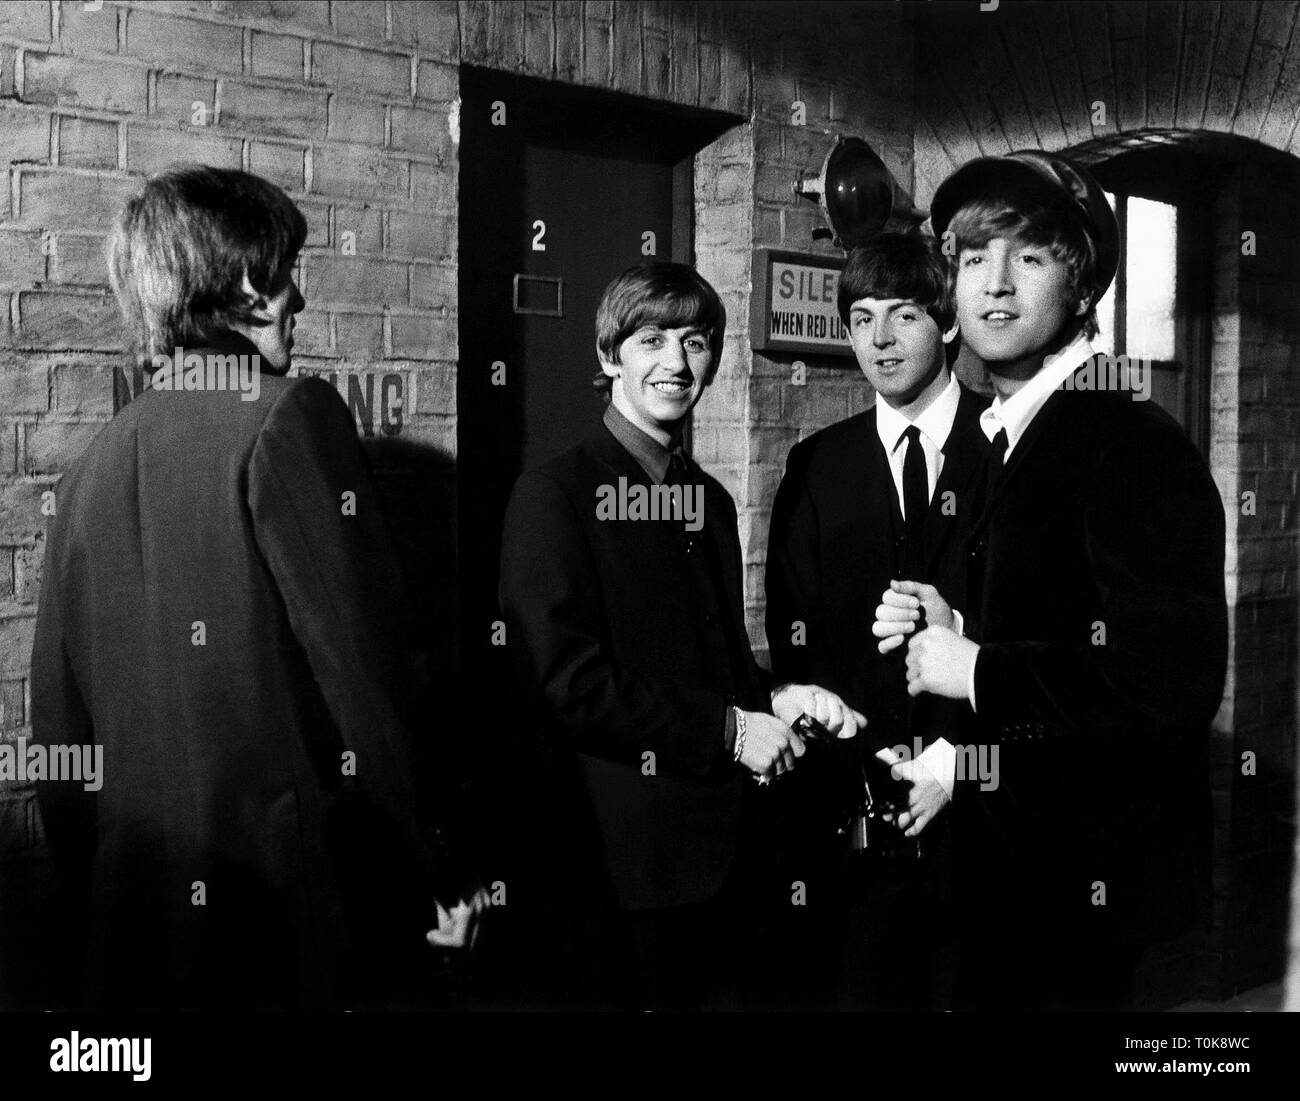 A HARD DAY'S NIGHT, RINGO STARR, GEORGE HARRISON, JOHN LENNON, PAUL MCCARTNEY, 1964 Stock Photo